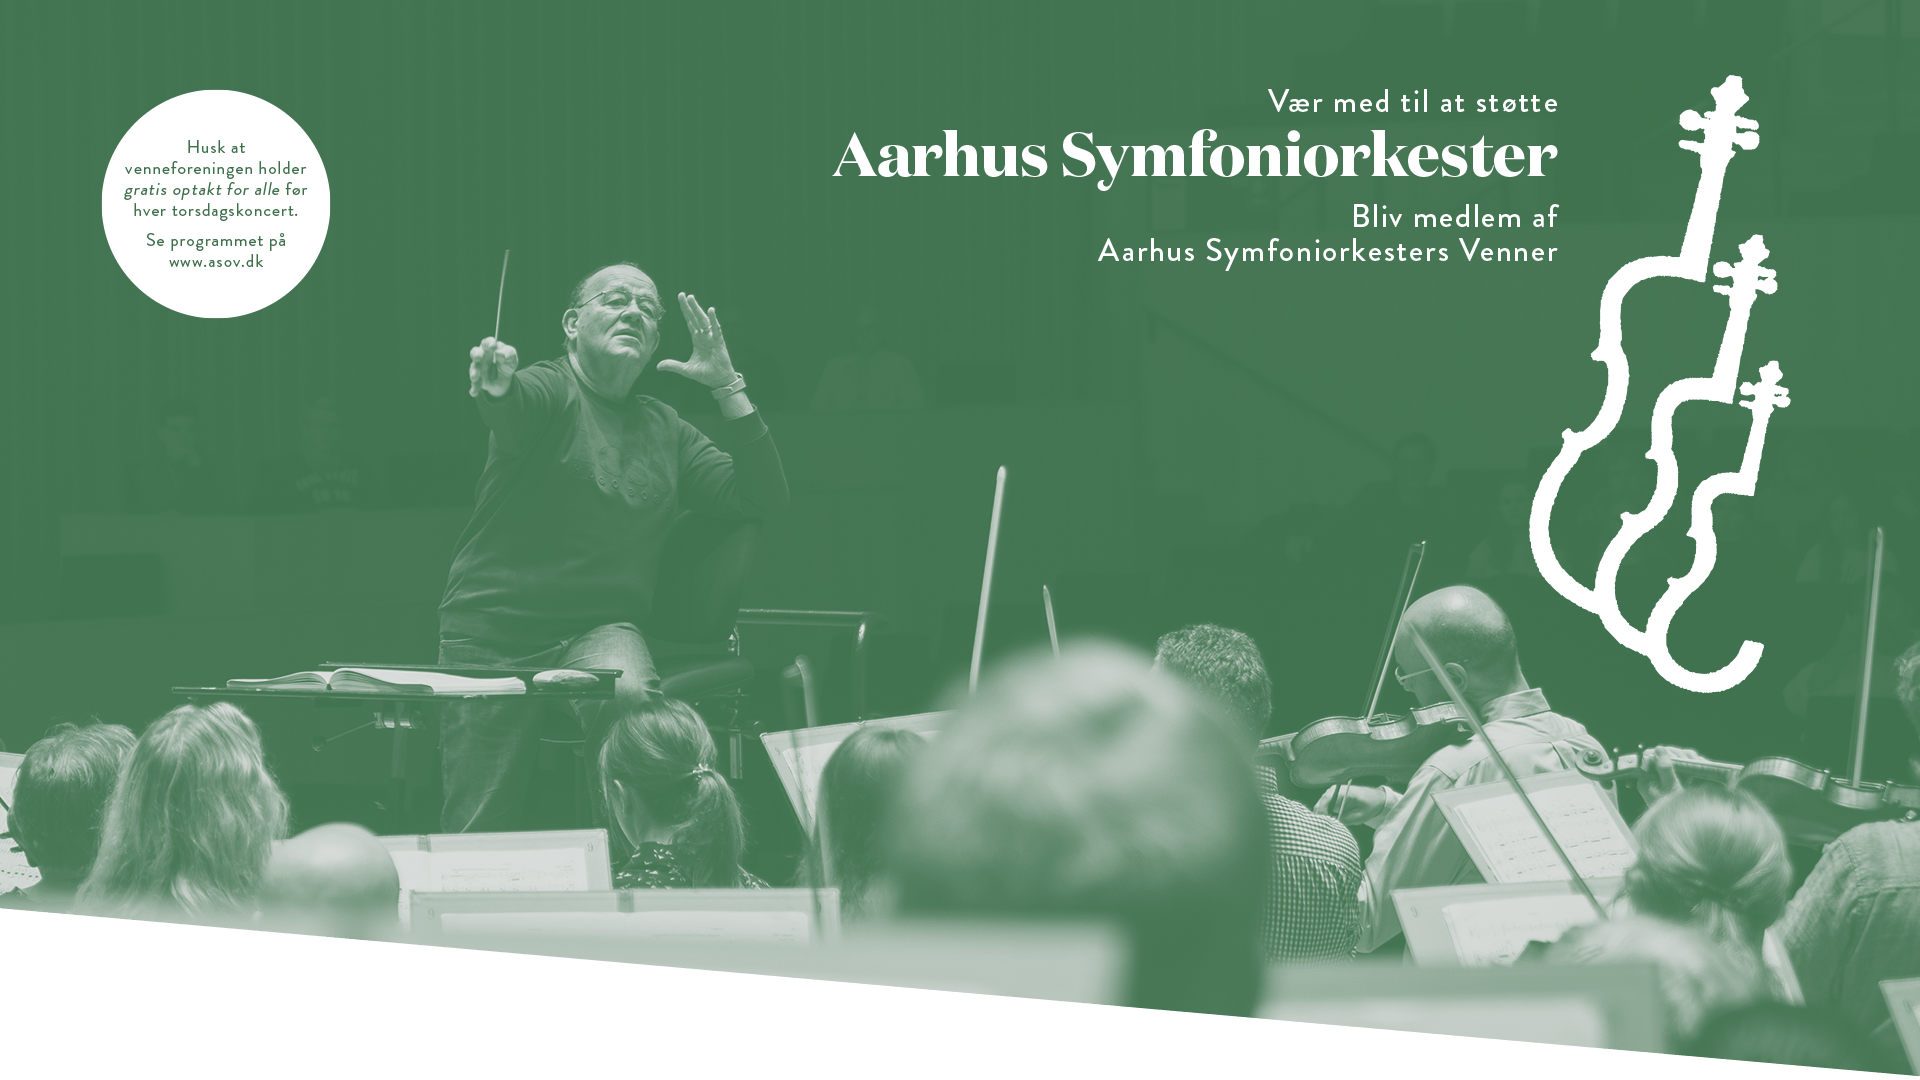 Aarhus Symfoniorkesters Venner